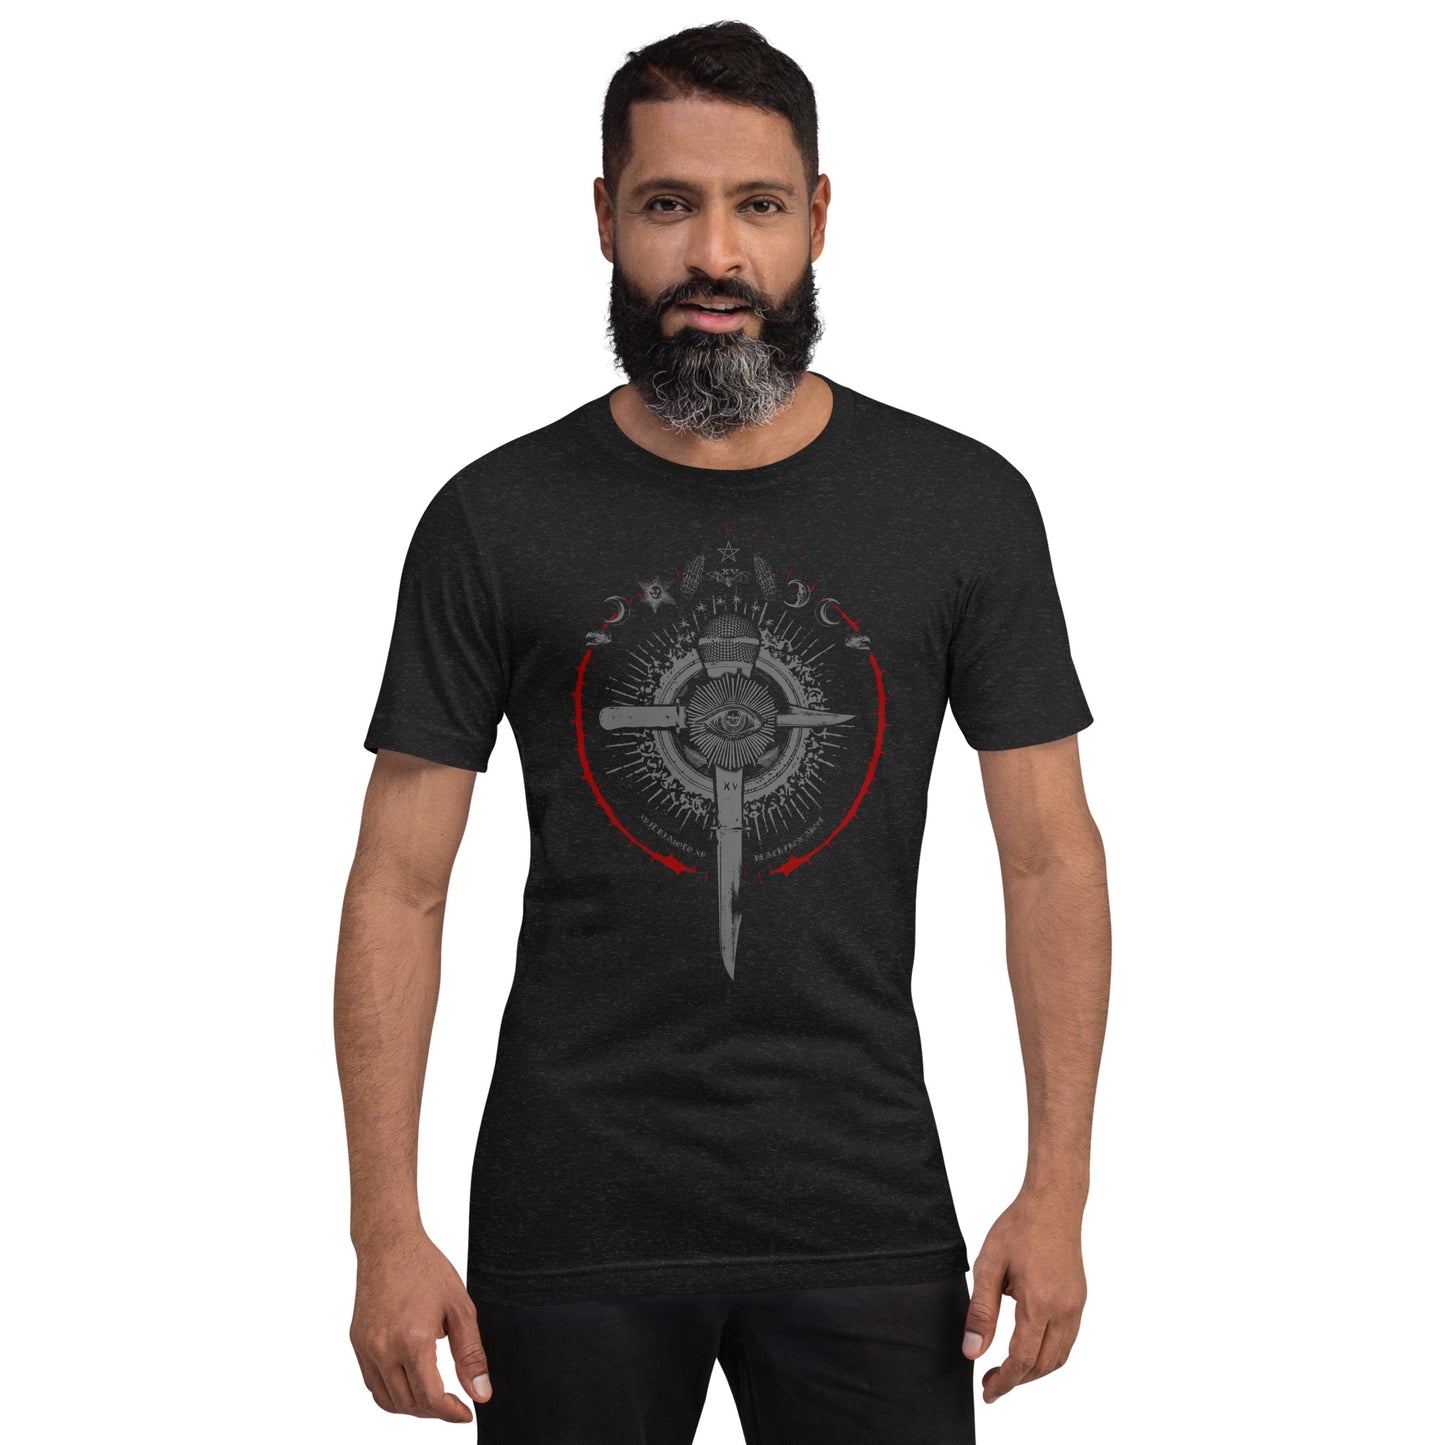 Knife Cross Alchemy  Shirt, Gothic Clothes. Singers Shirt, Satanic Shirt, Musician Shirt